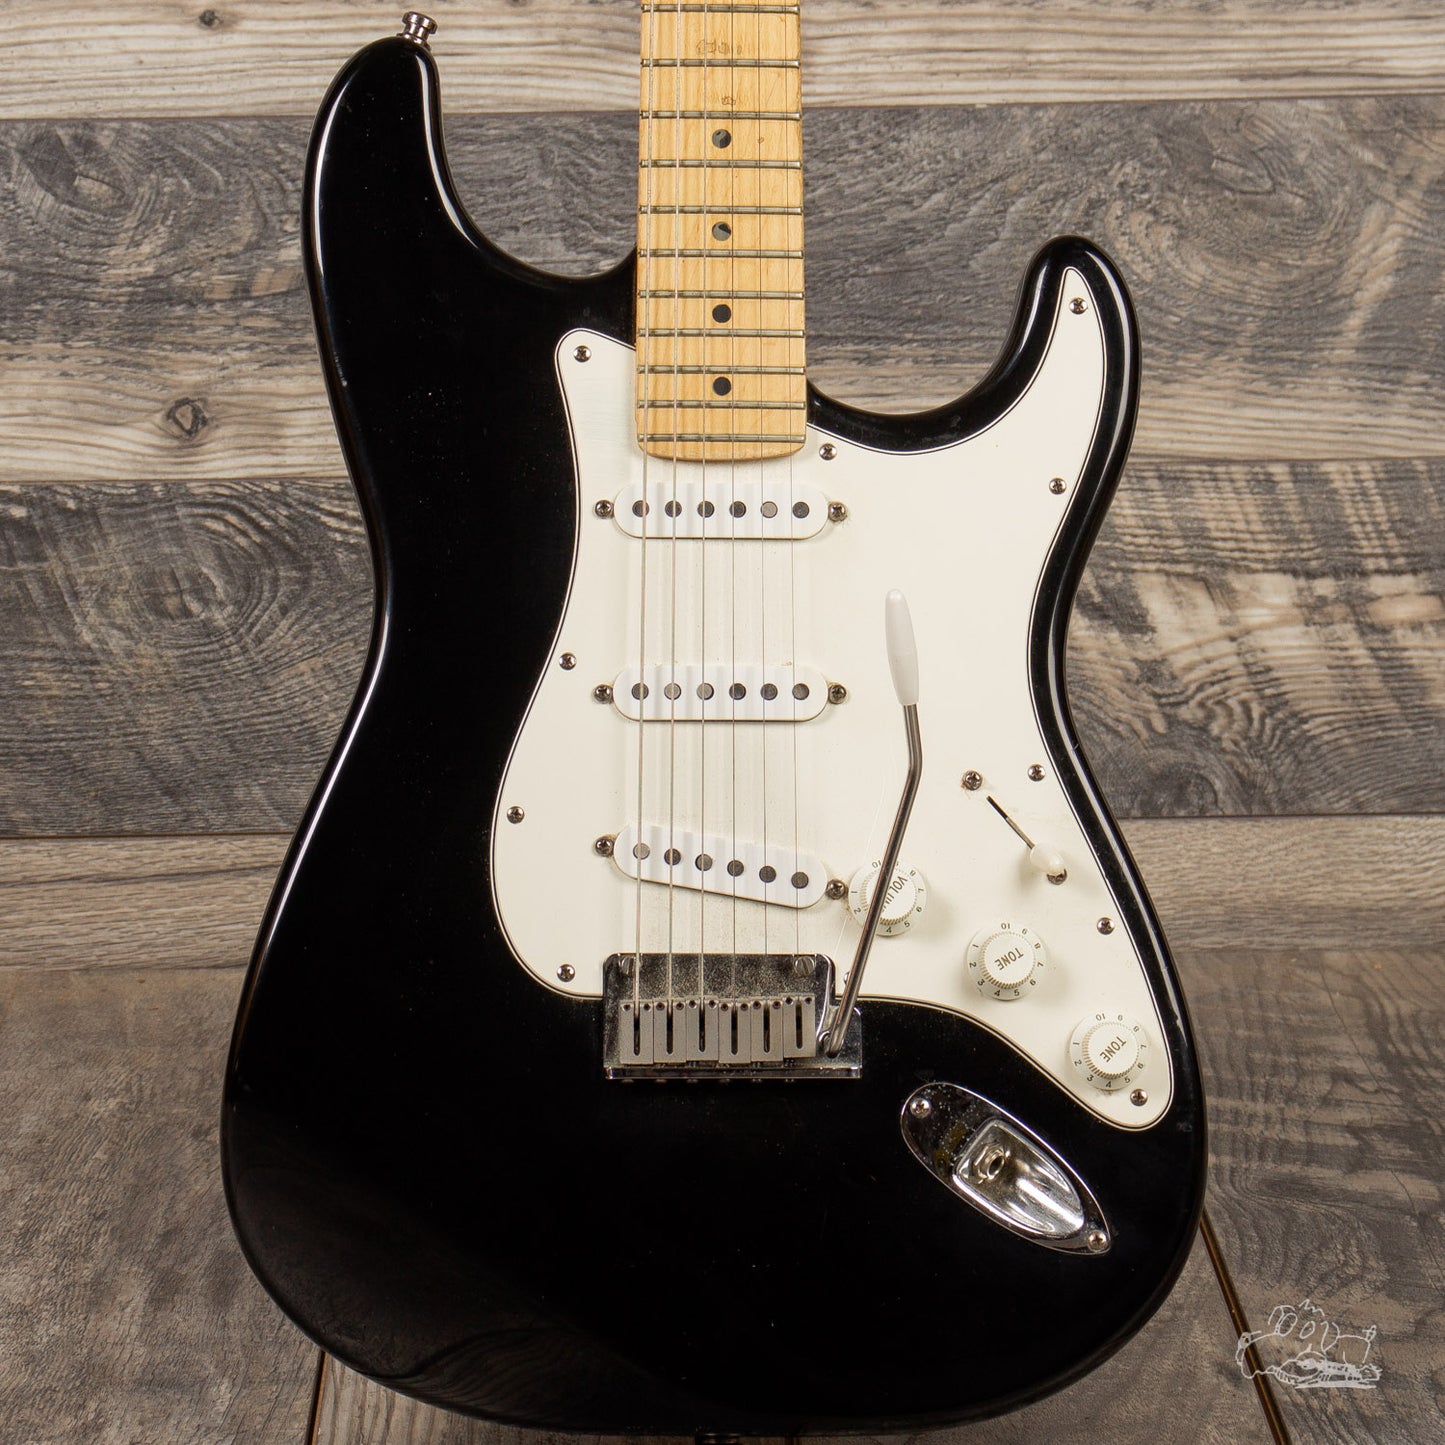 1993 American Standard Fender Stratocaster